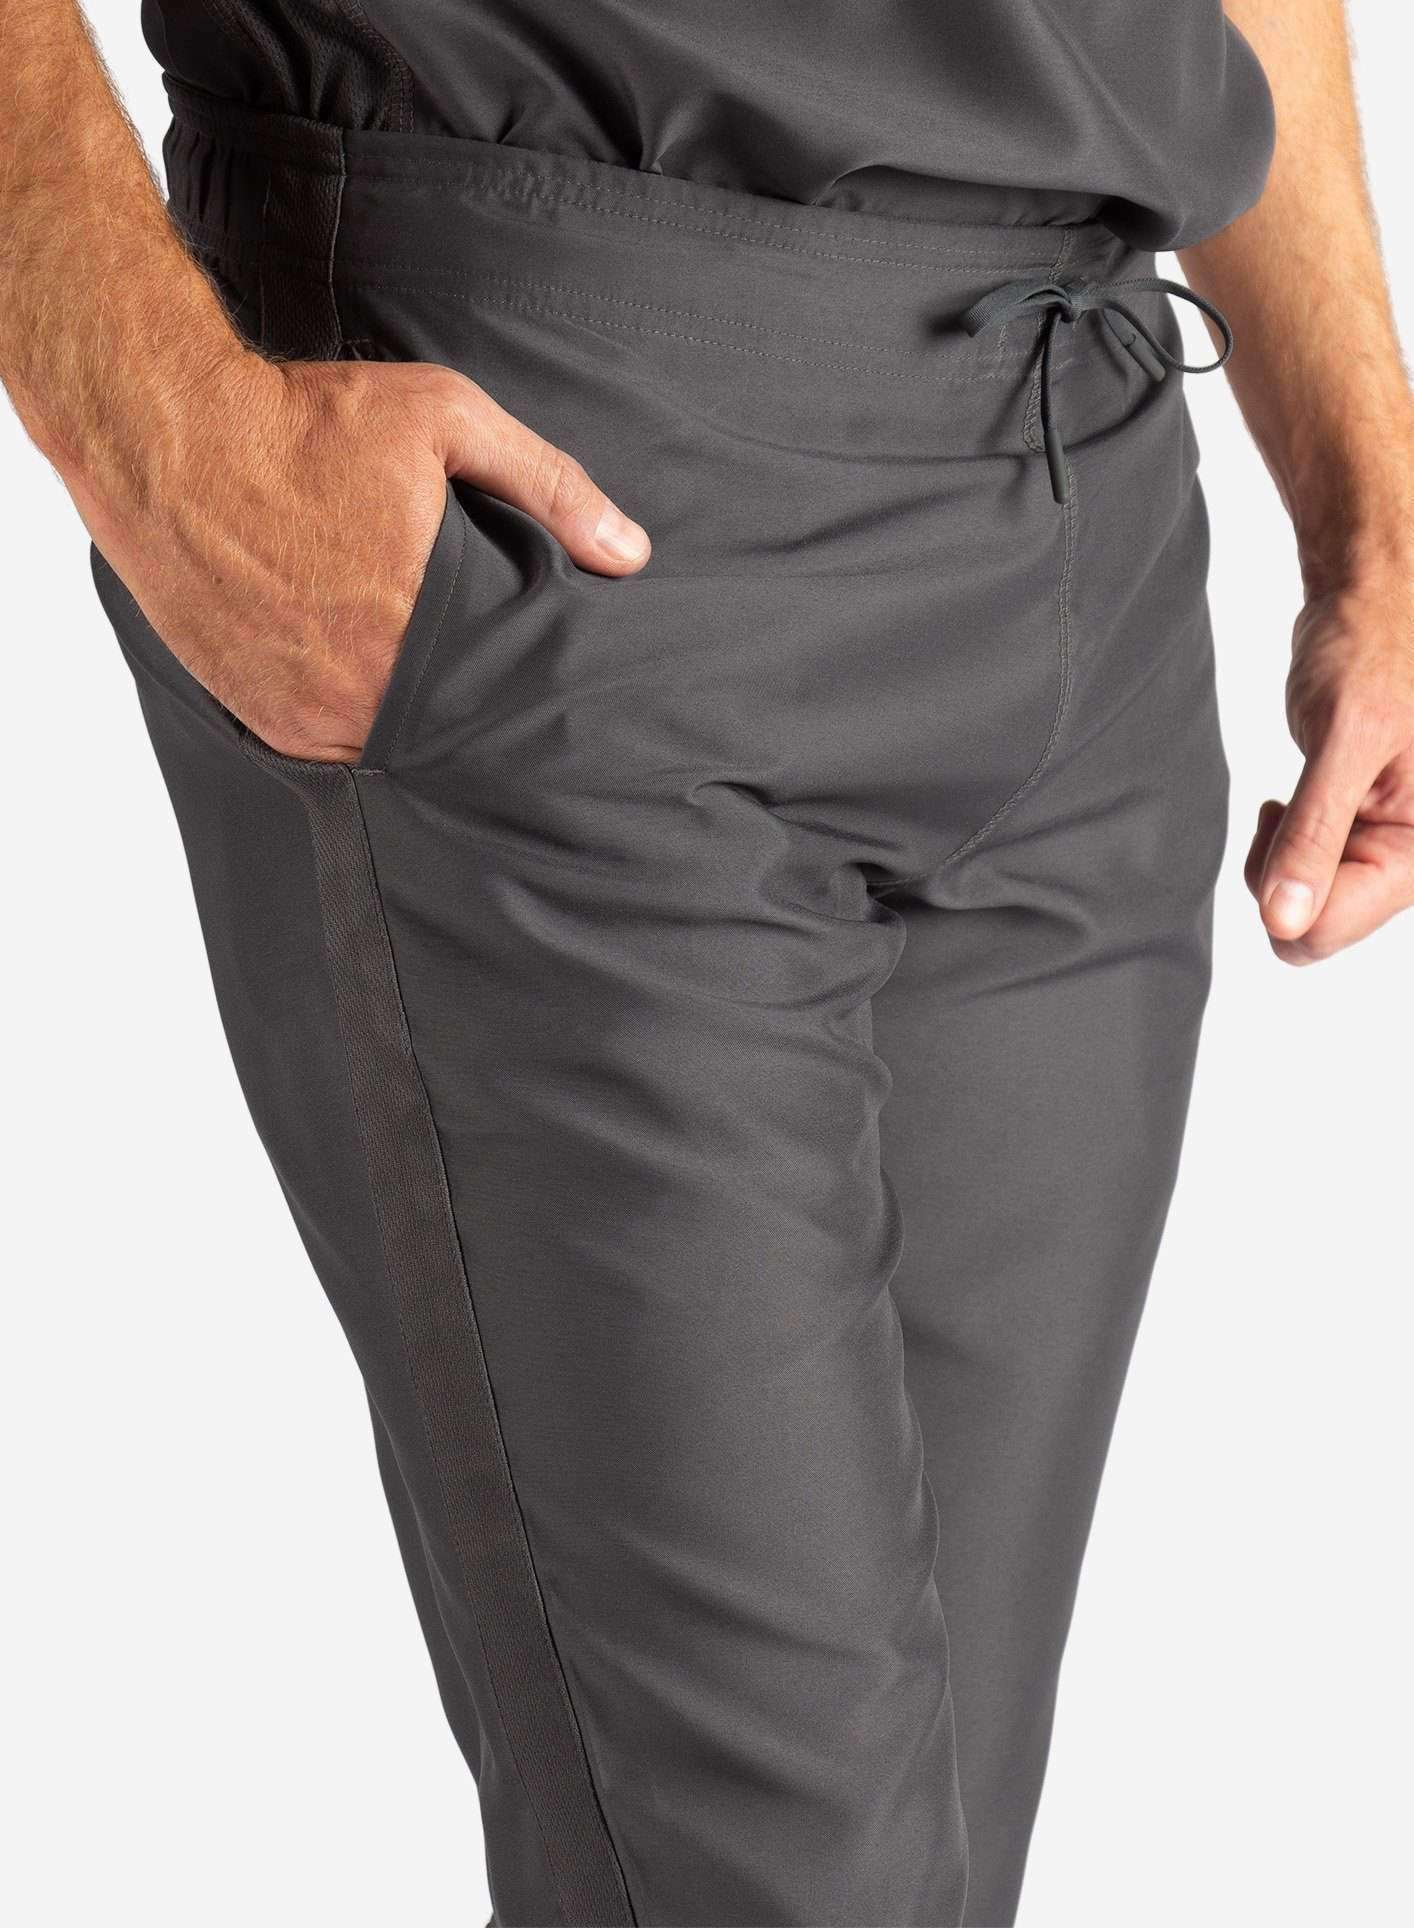 Men&#39;s Slim Fit Scrub Pants in Dark gray Waistband View